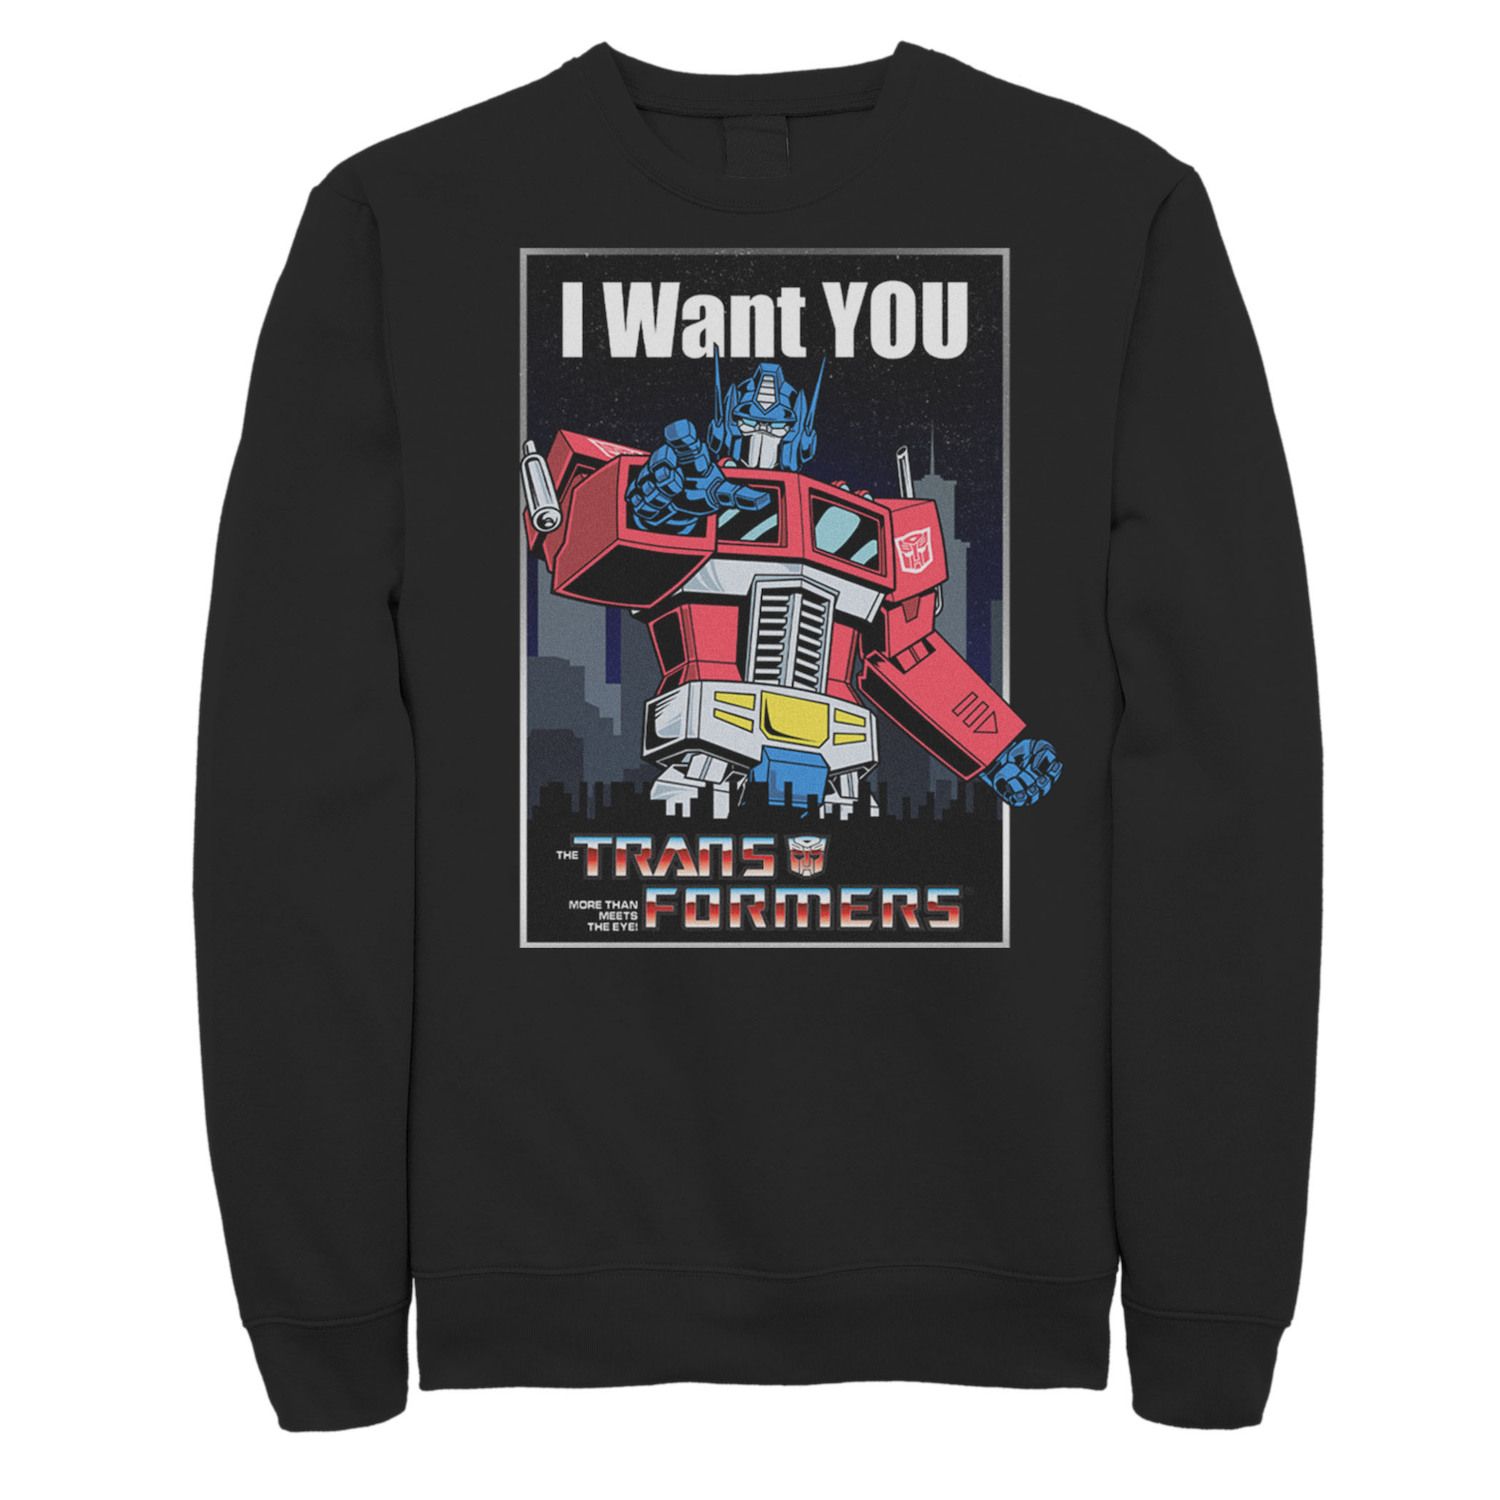 Мужской свитшот Transformers Optimus Prime I Want You Licensed Character фигурка reaction figure transformers – optimus prime 9 см